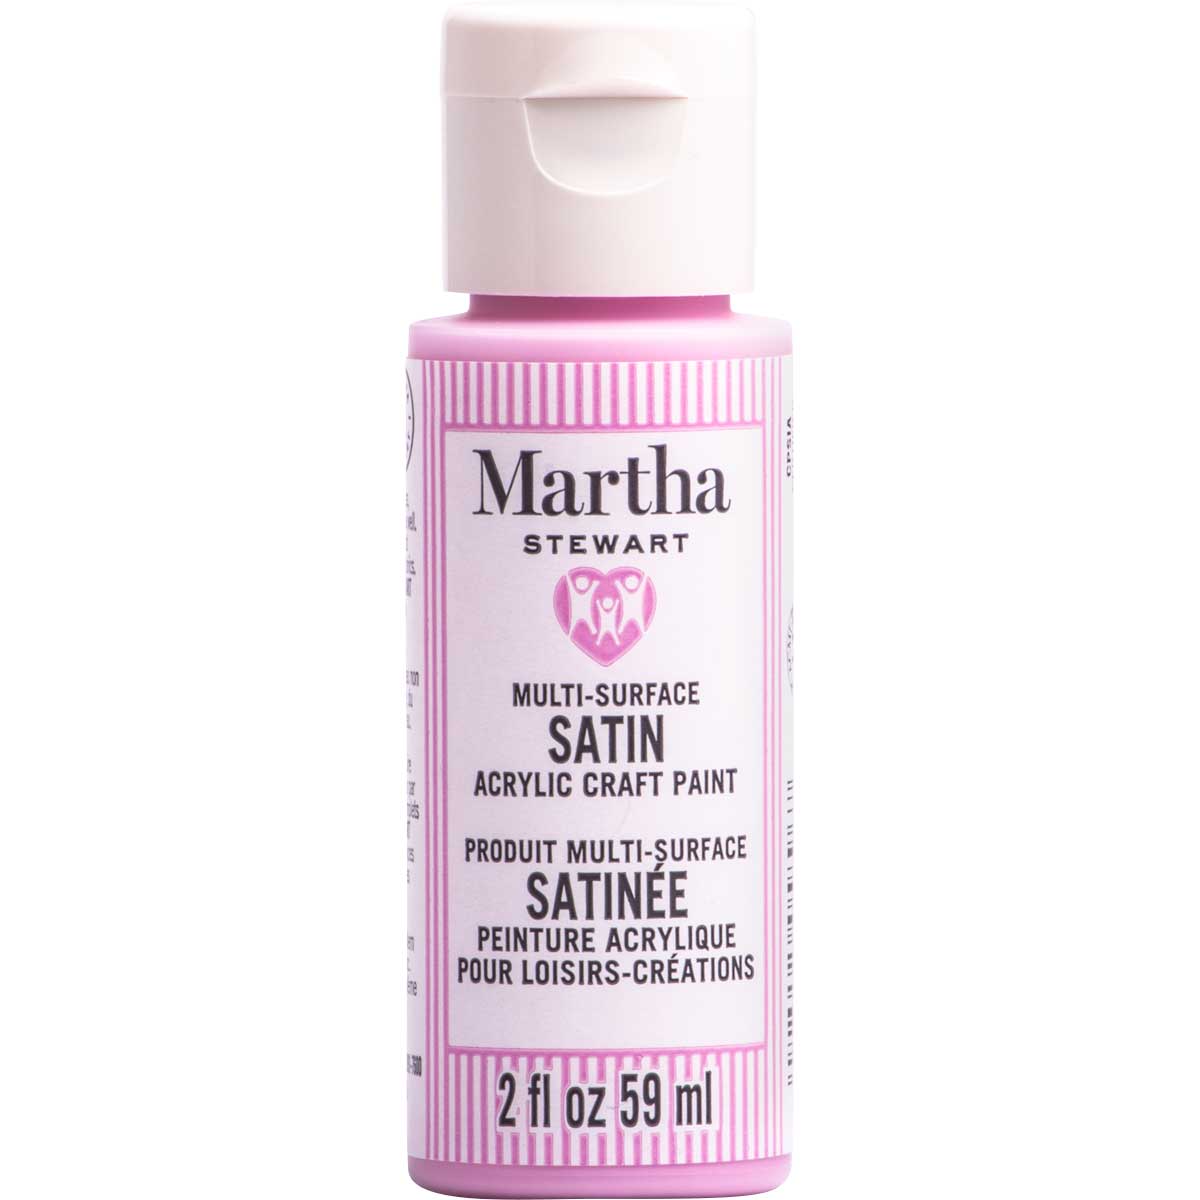 Martha Stewart ® Multi-Surface Satin Acrylic Craft Paint CPSIA - Piglet Pink, 2 oz. - 5896